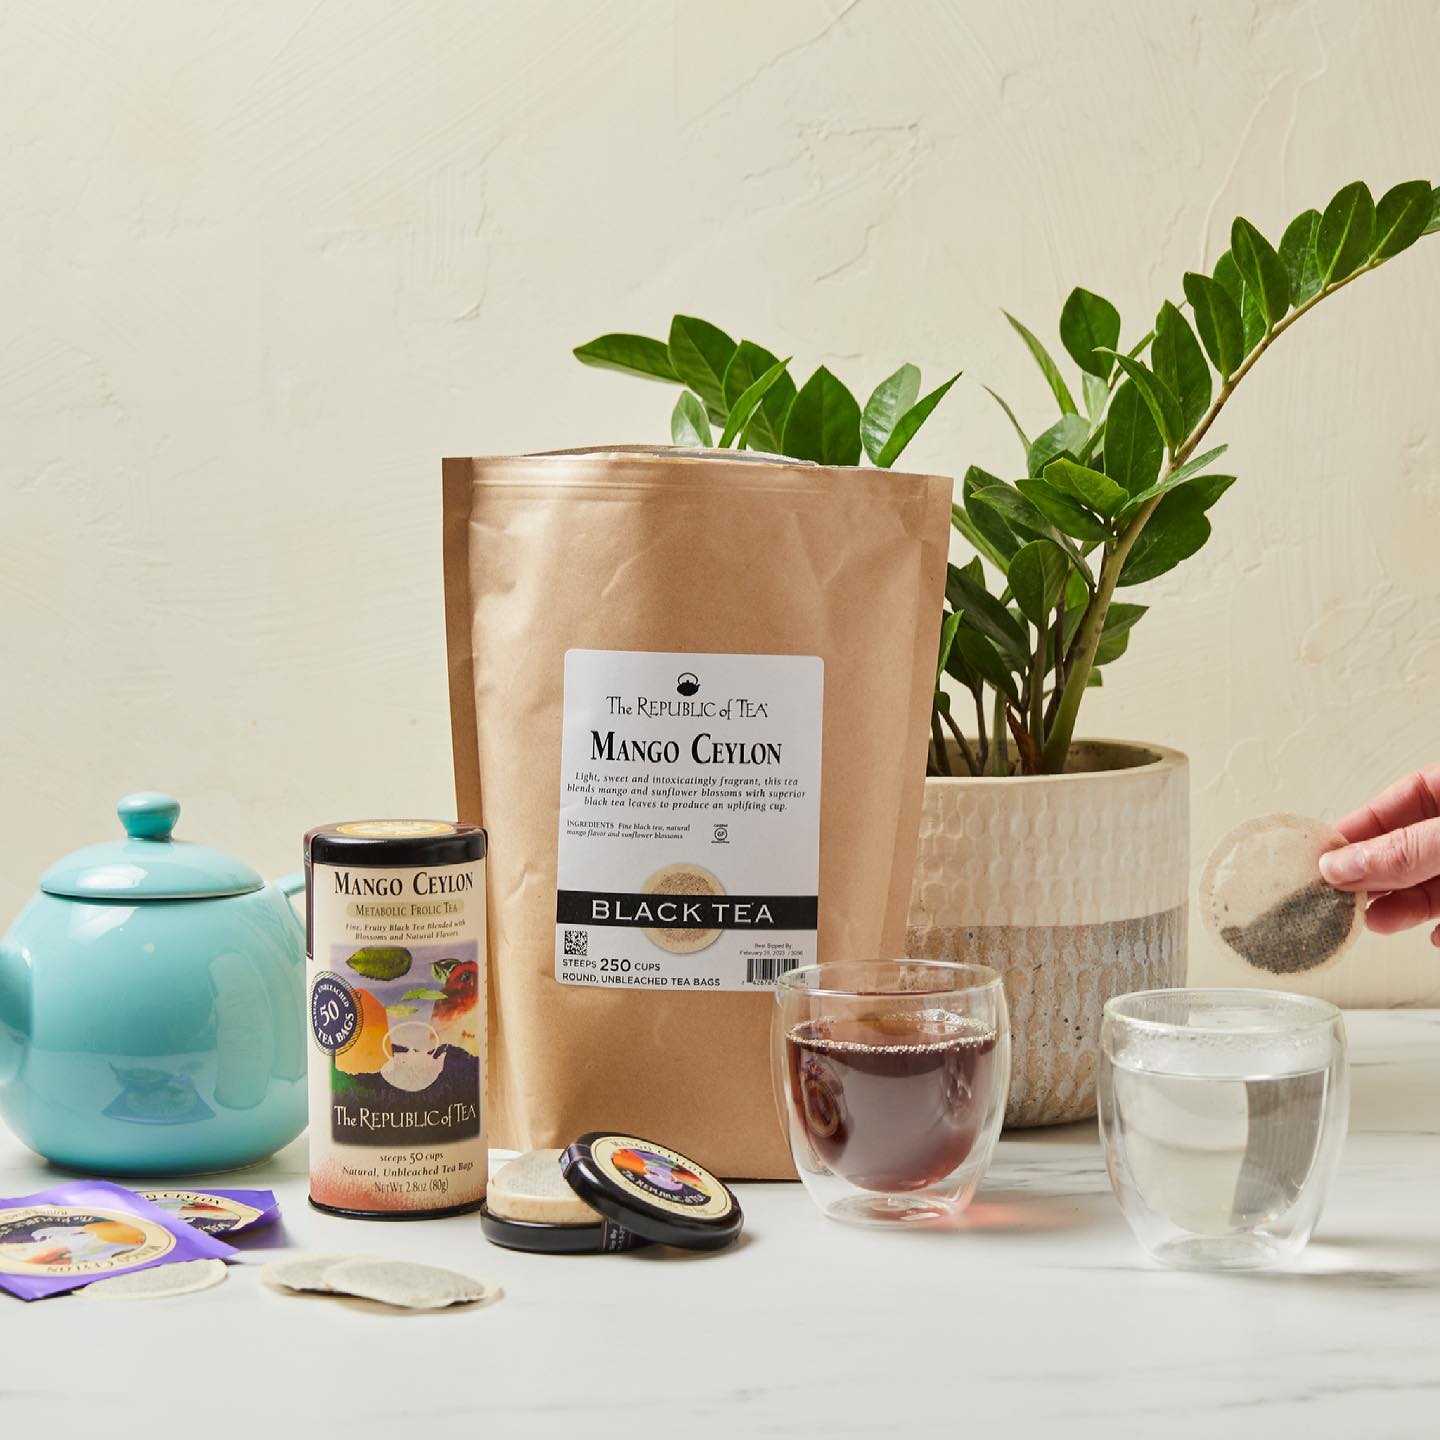 Art of Tea | White Coconut Crme Tea | 50 Eco Friendly Pyramid Tea Bag Sachets